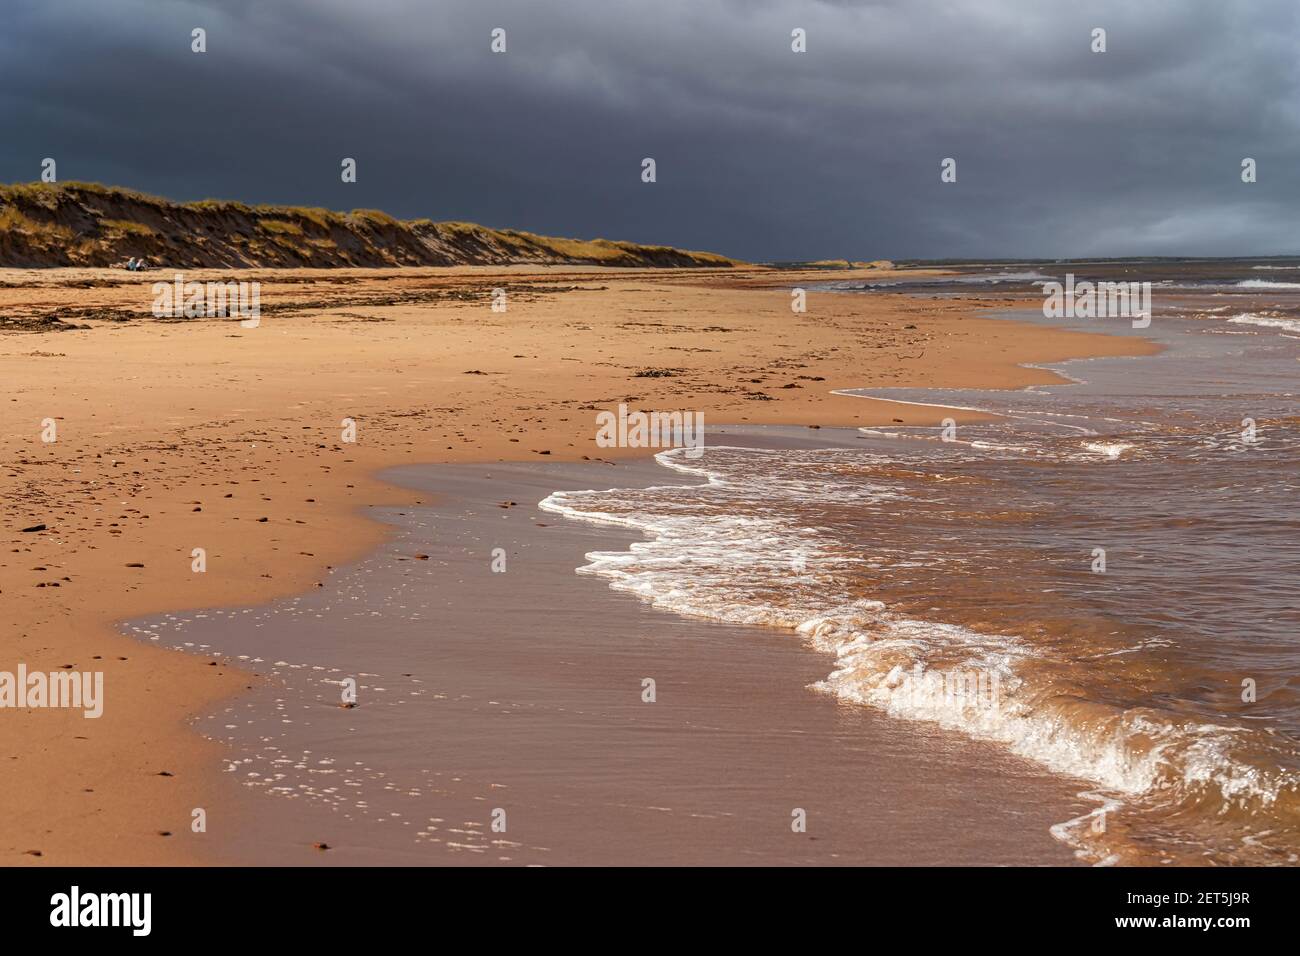 Sandy beach under stormy skies in rural Prince Edward Island, Canada. Stock Photo